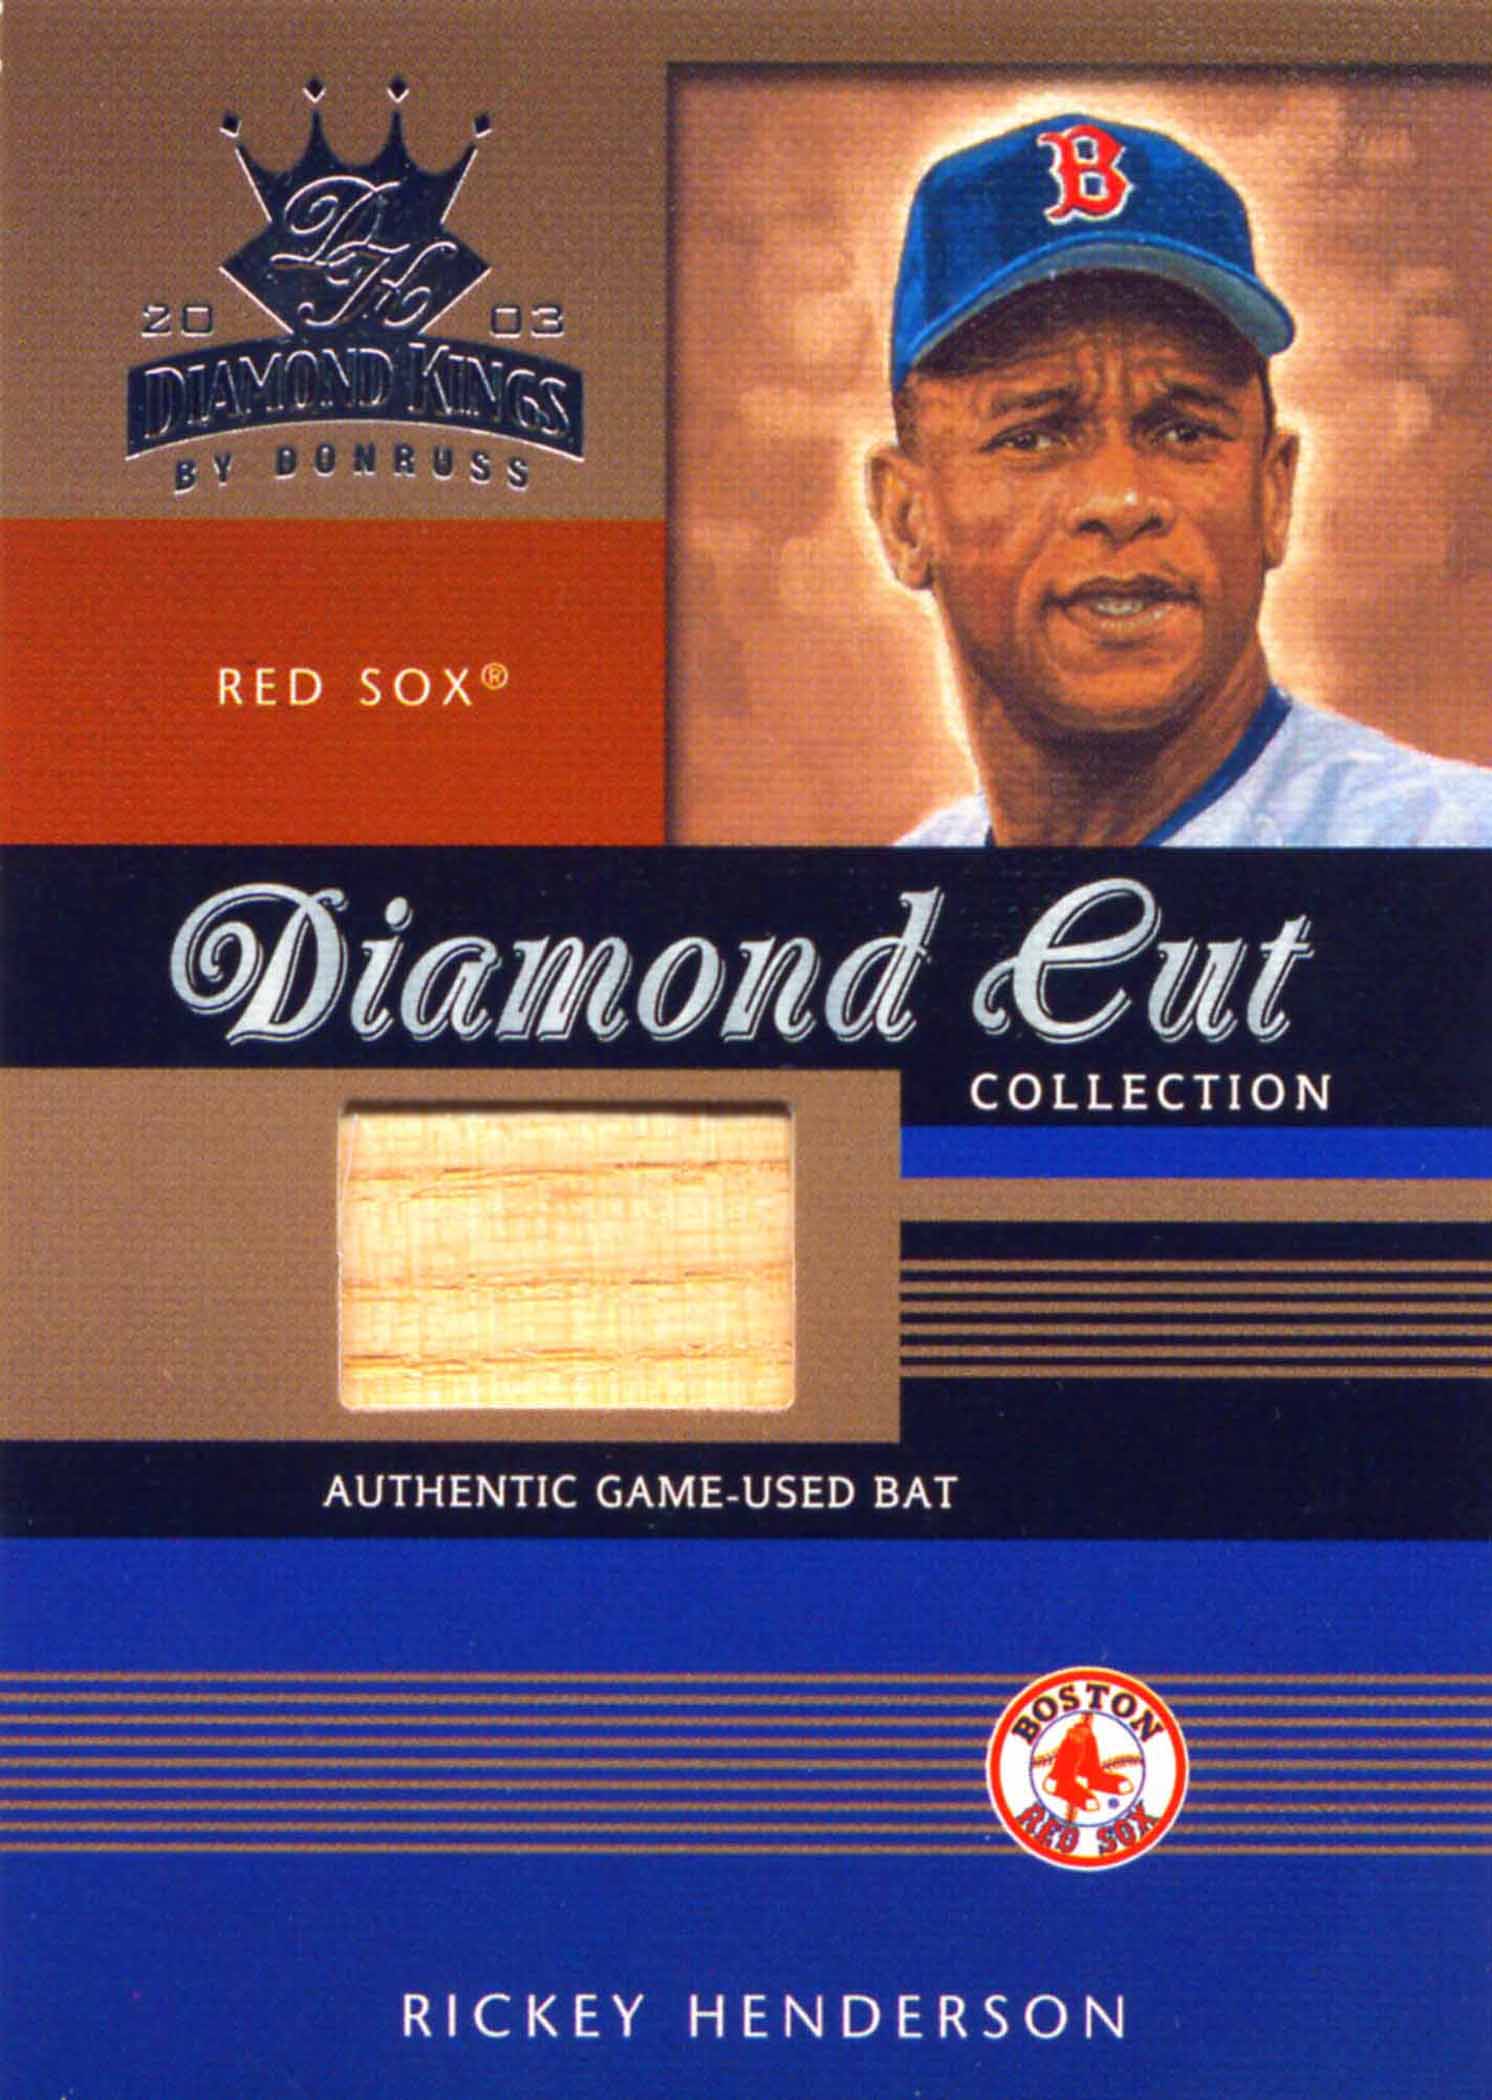 2003 Diamond Kings Diamond Cut Collection Bat